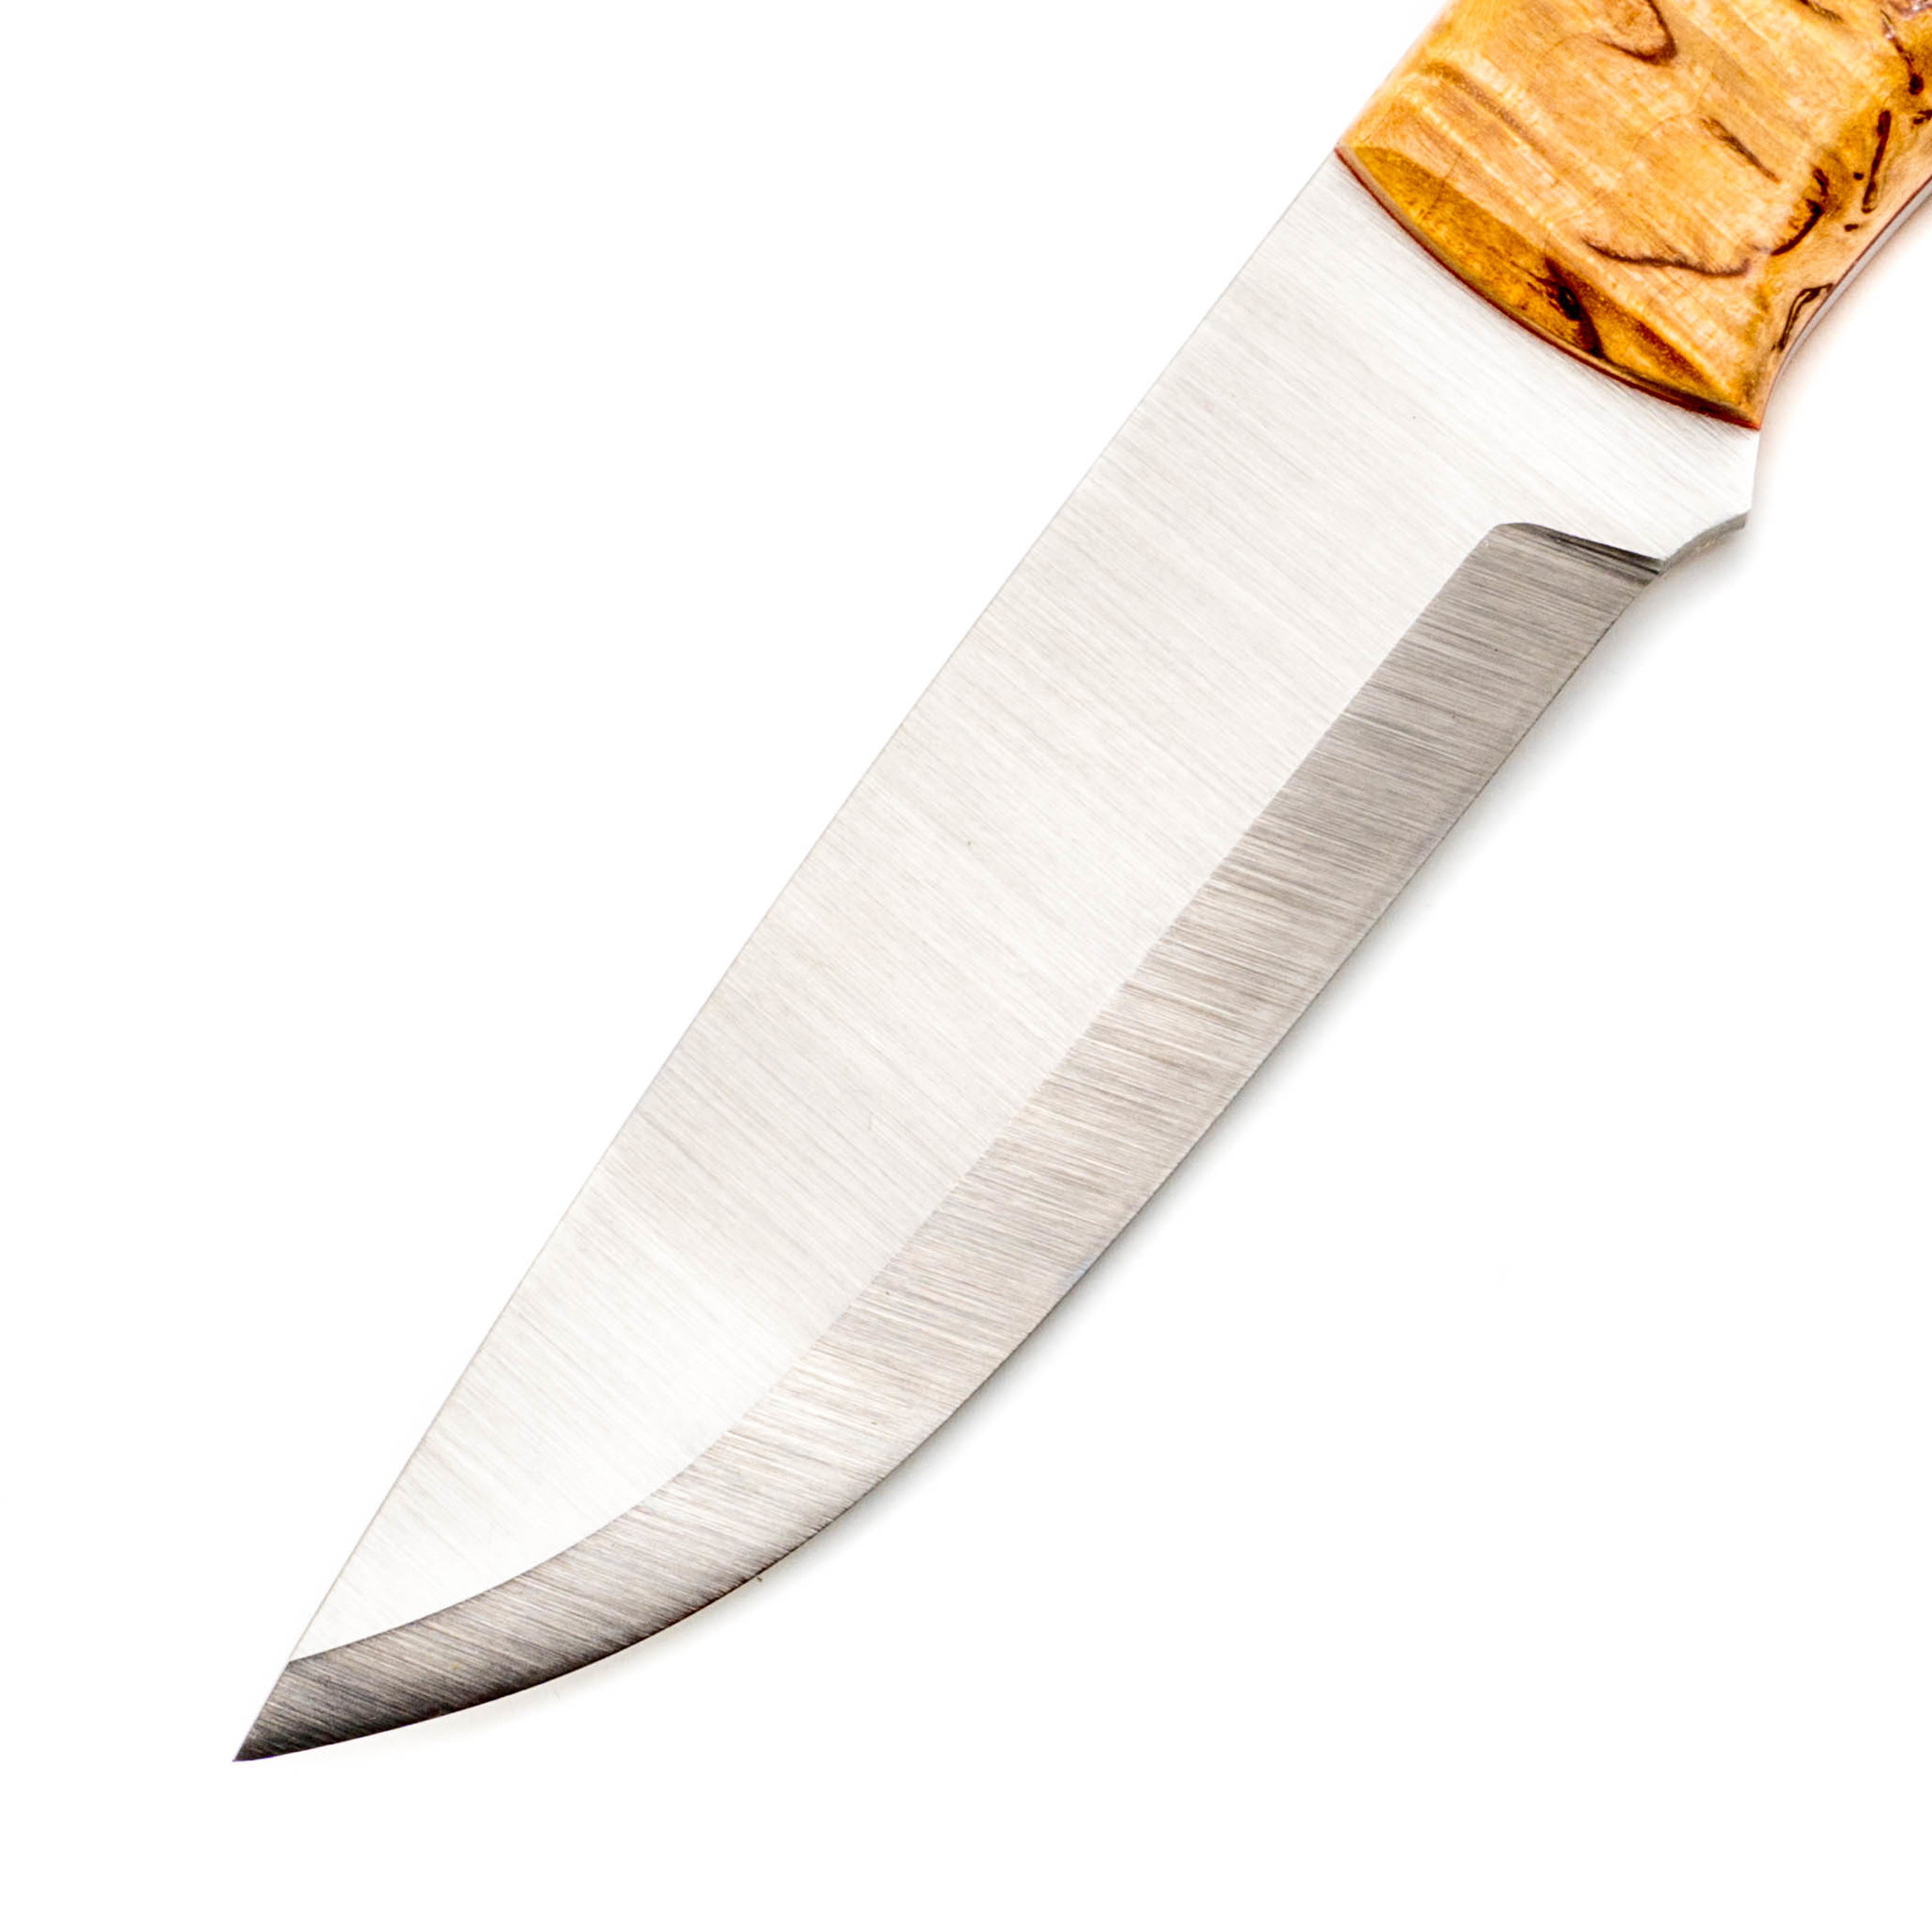 Нож Enzo Trapper 95 Birch O1 stainless scandi grind blade - фото 3